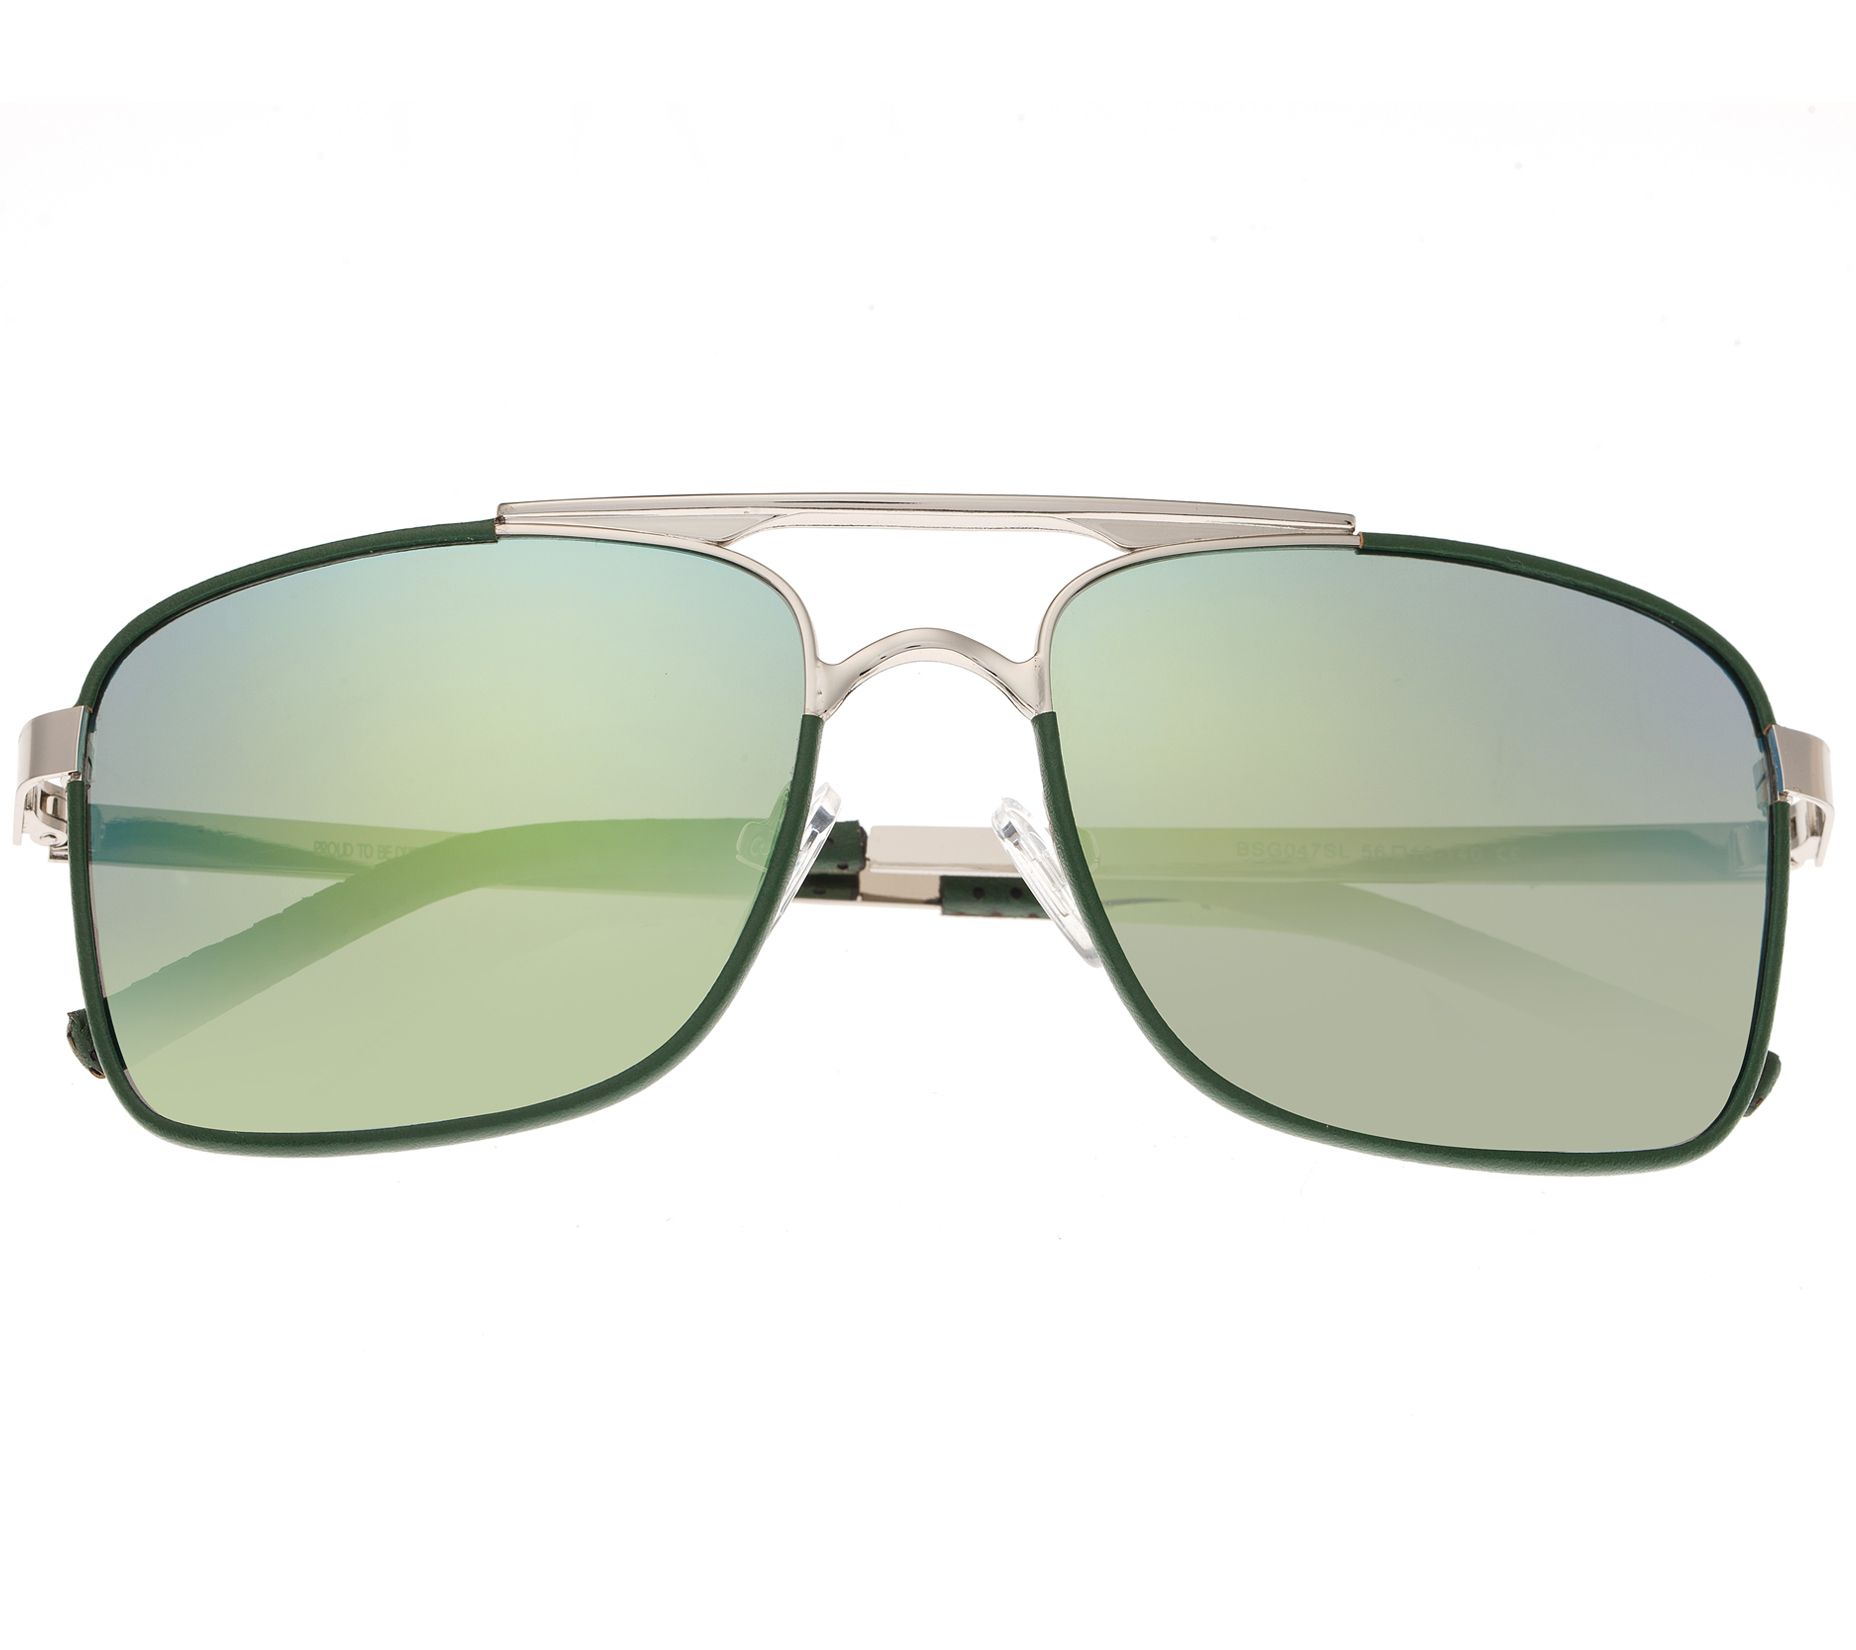 Breed Draco Polarized Titanium Sunglasses - QVC.com